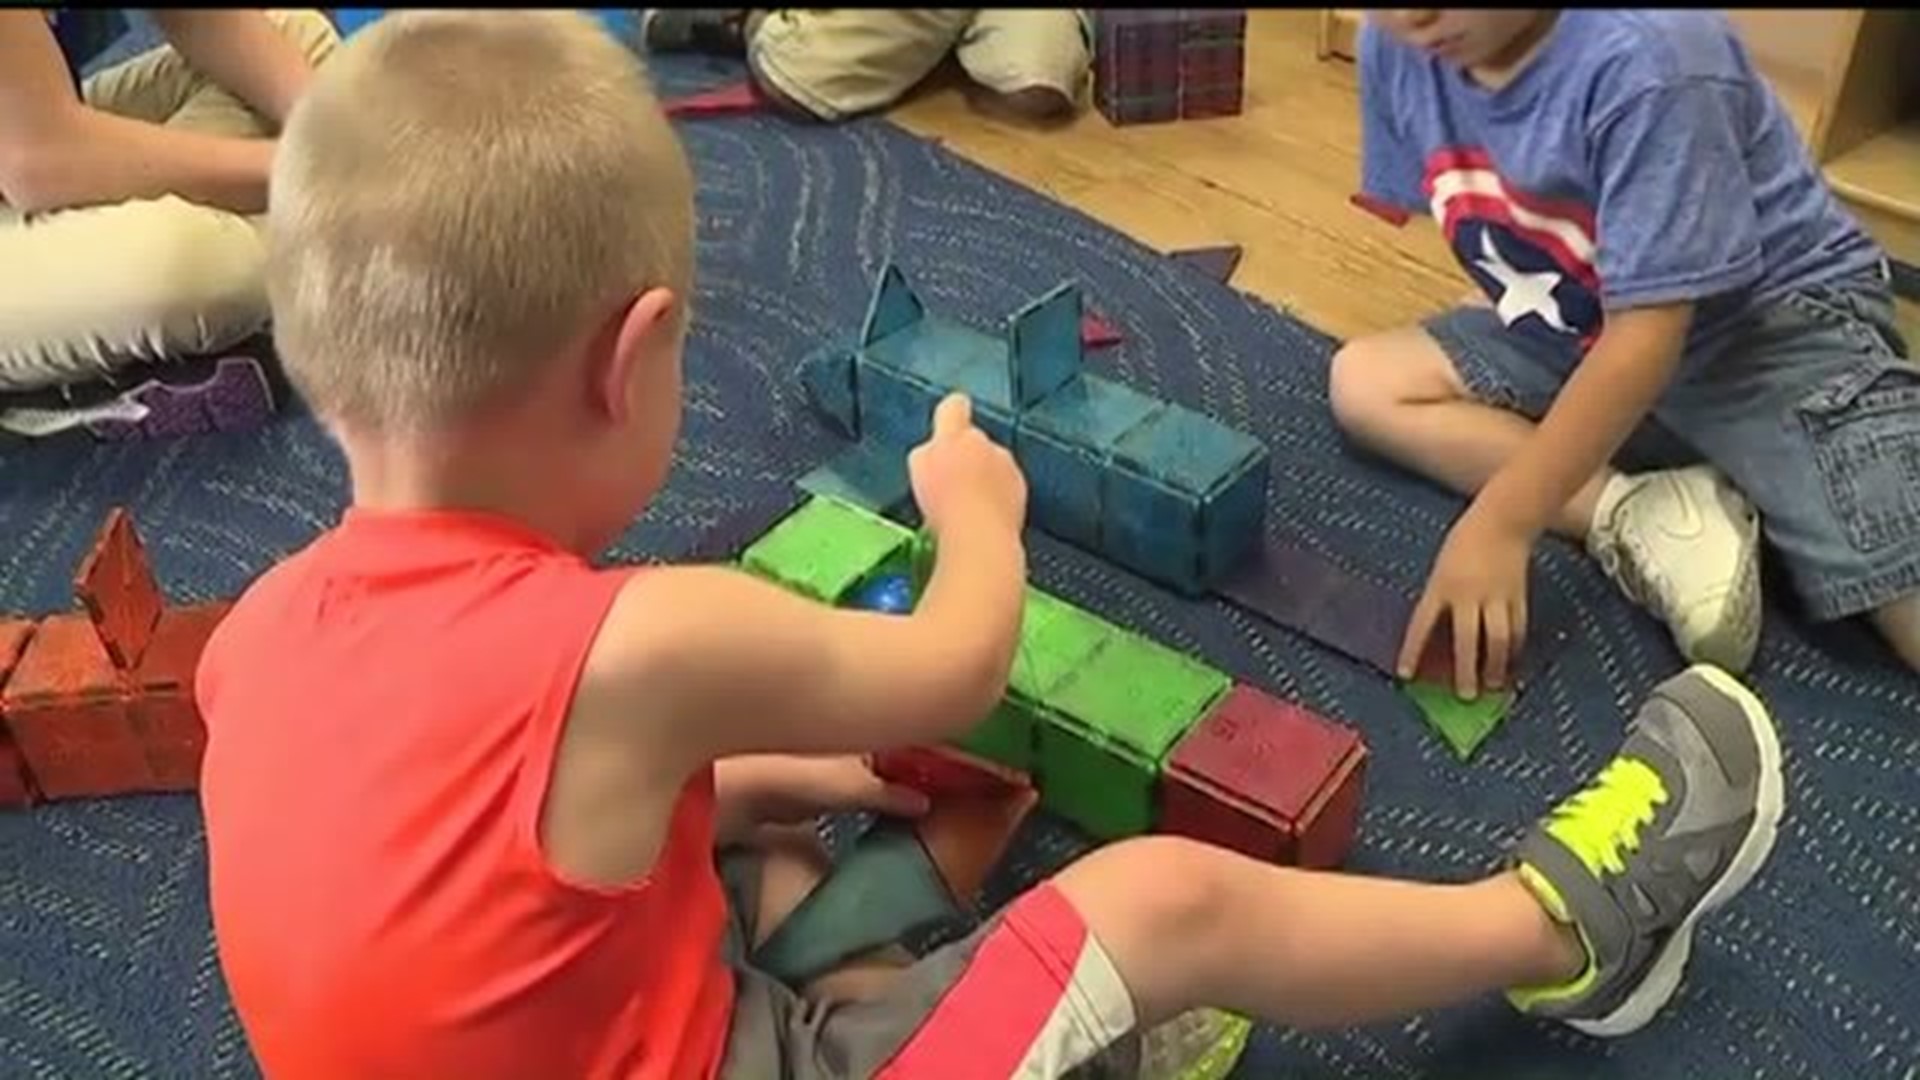 Child Care Assistance Program Cuts